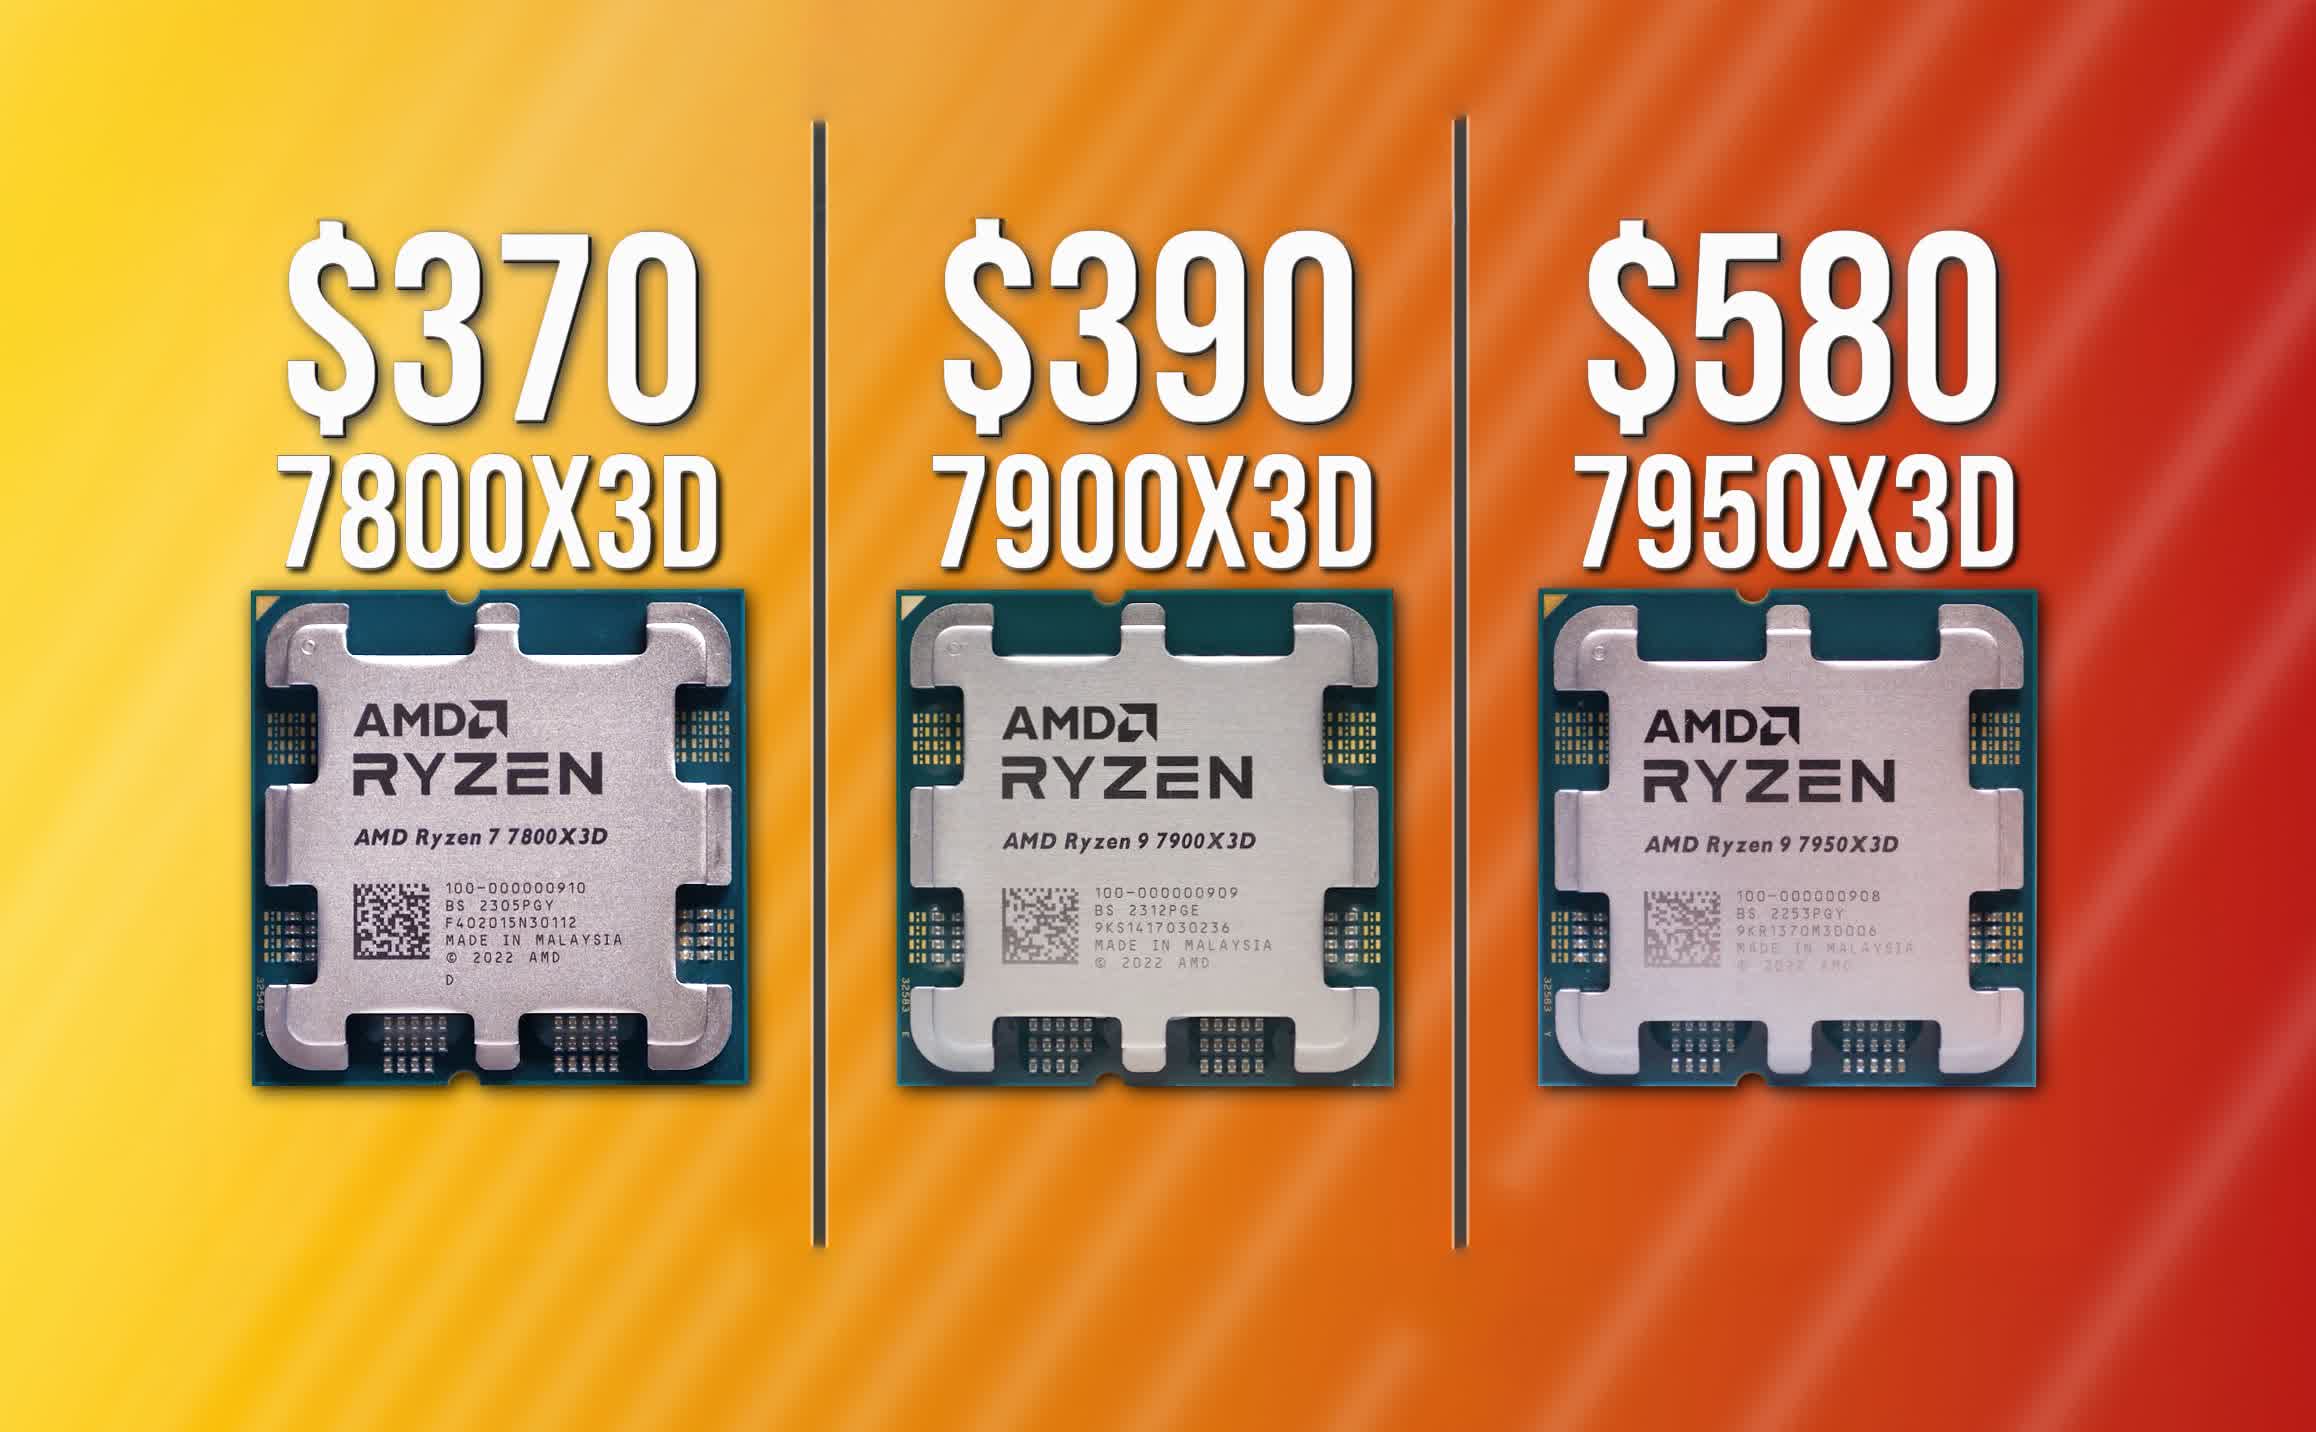 AMD Ryzen 7800X3D vs. 7900X3D vs. 7950X3D